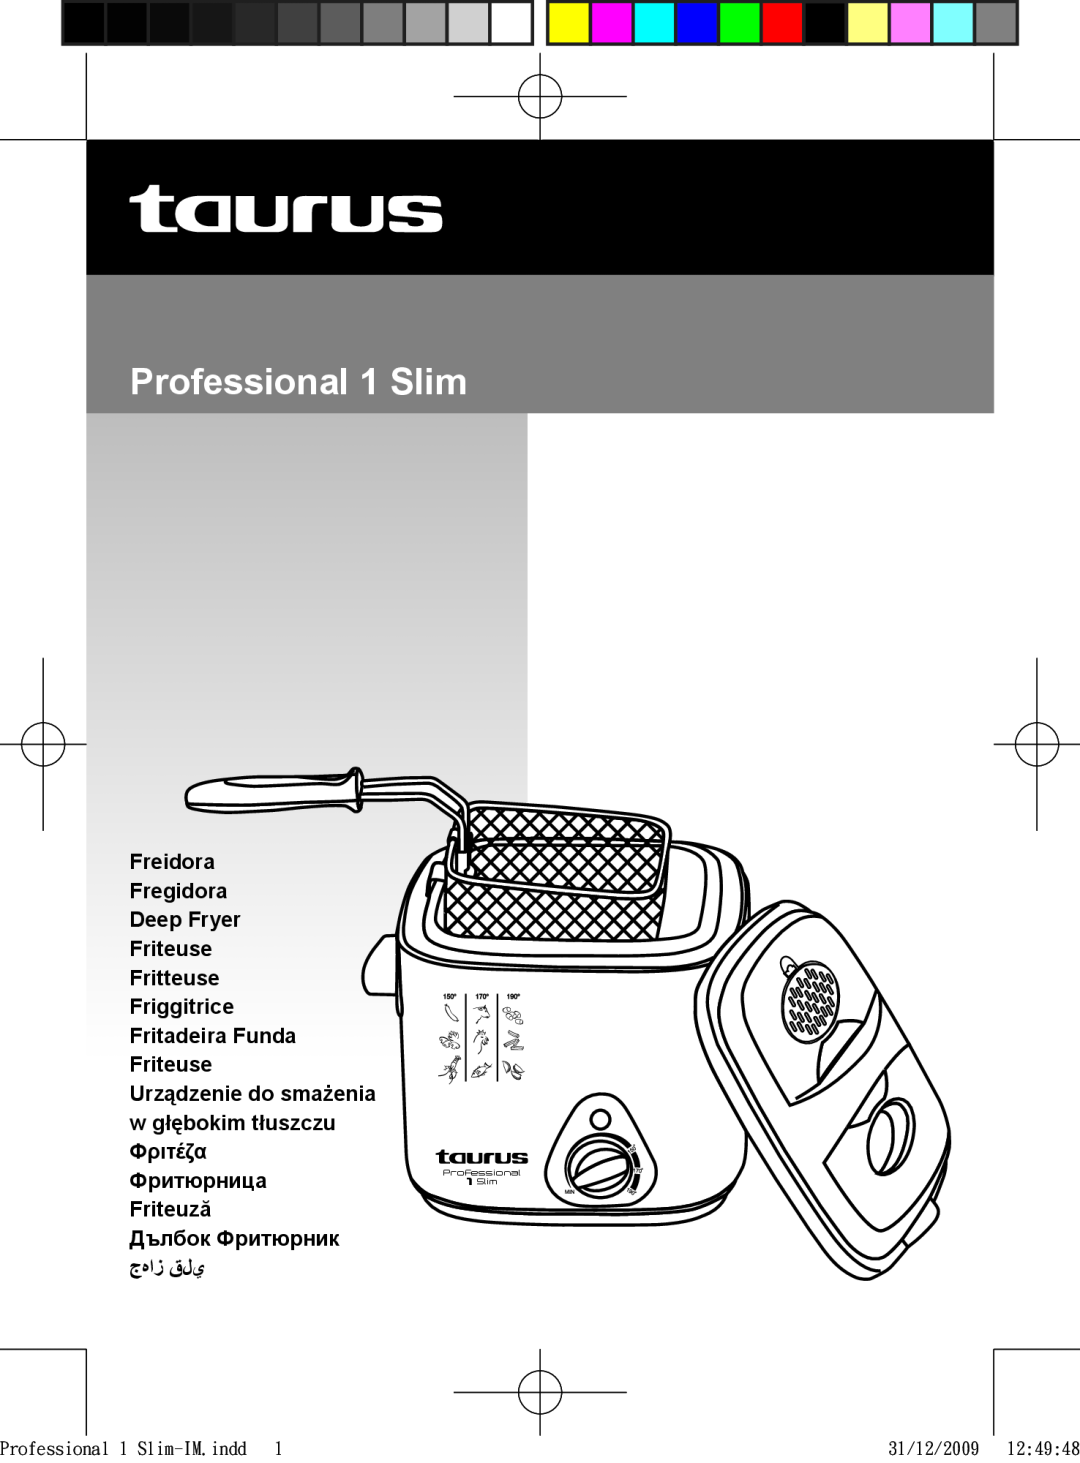 Taurus Group manual Professional 1 Slim, Freidora Fregidora Deep Fryer Friteuse Fritteuse Friggitrice, 31/12/2009 